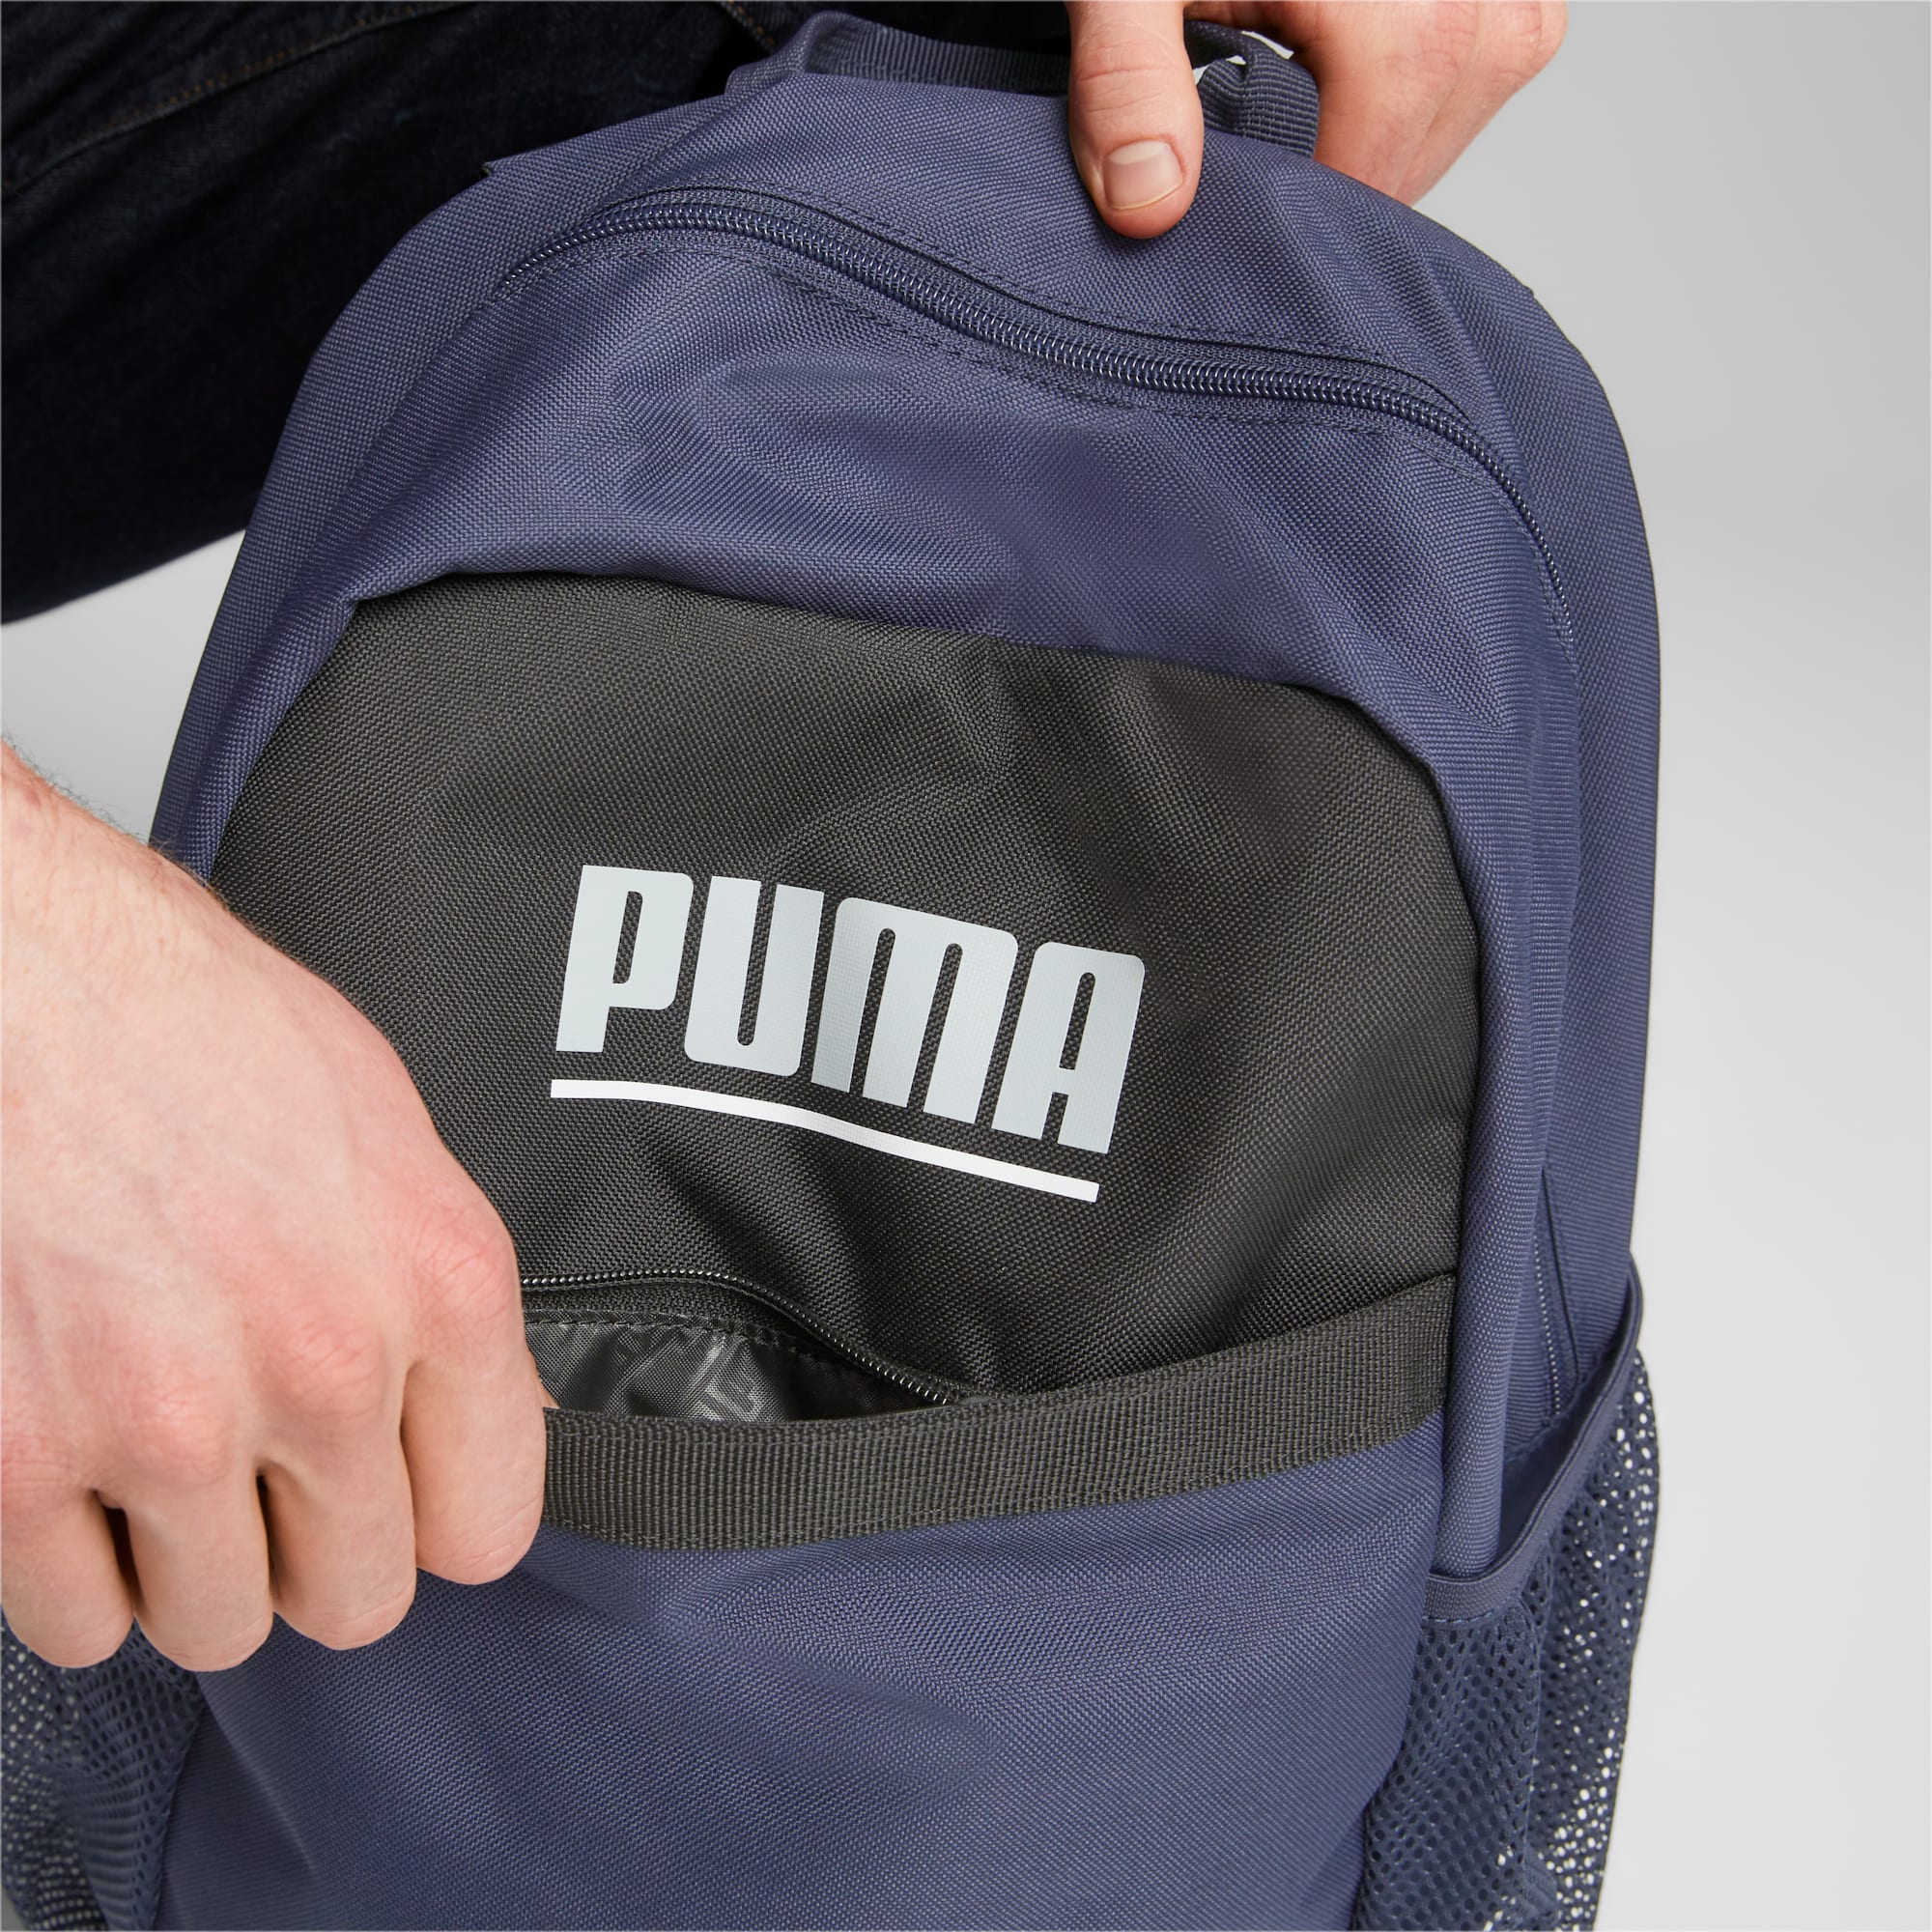 Women's PUMA Plus Backpack, Dark Blue, Accessories